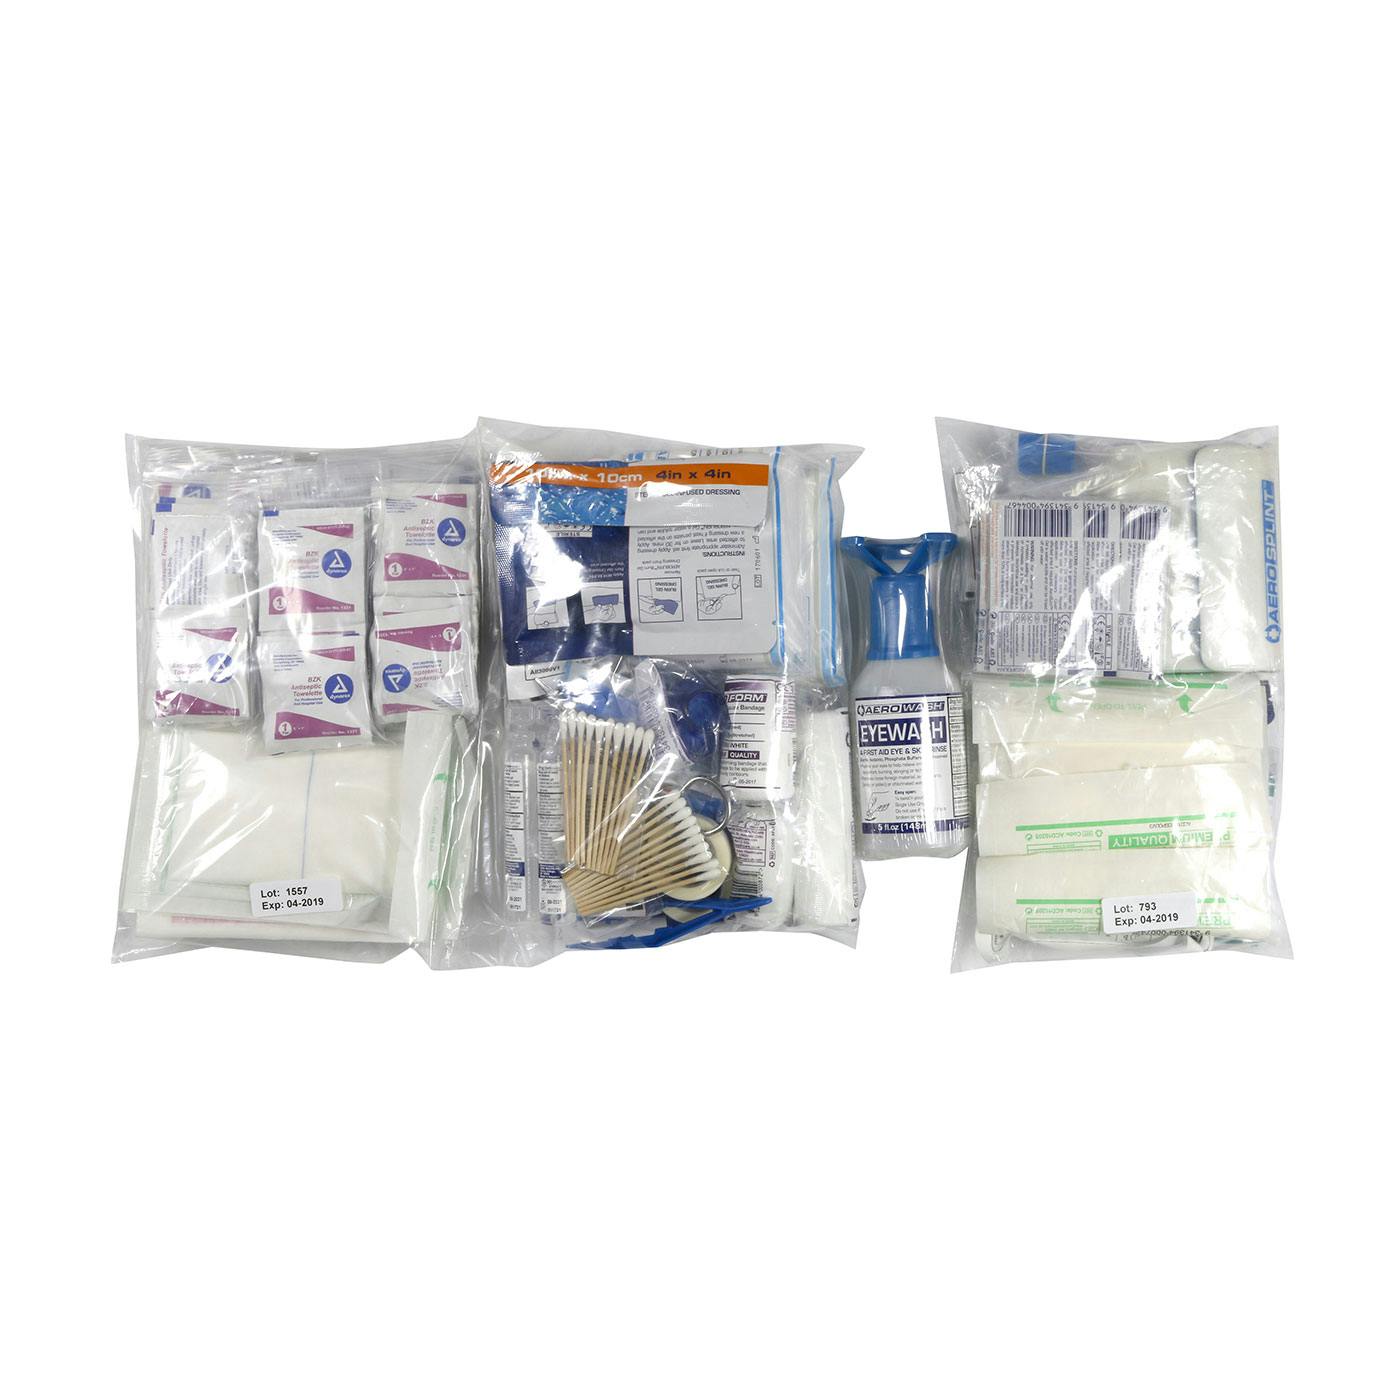 ANSI Class B First Aid Refill Pouches - 50 Person, Clear (299-15050B-RP) - KIT